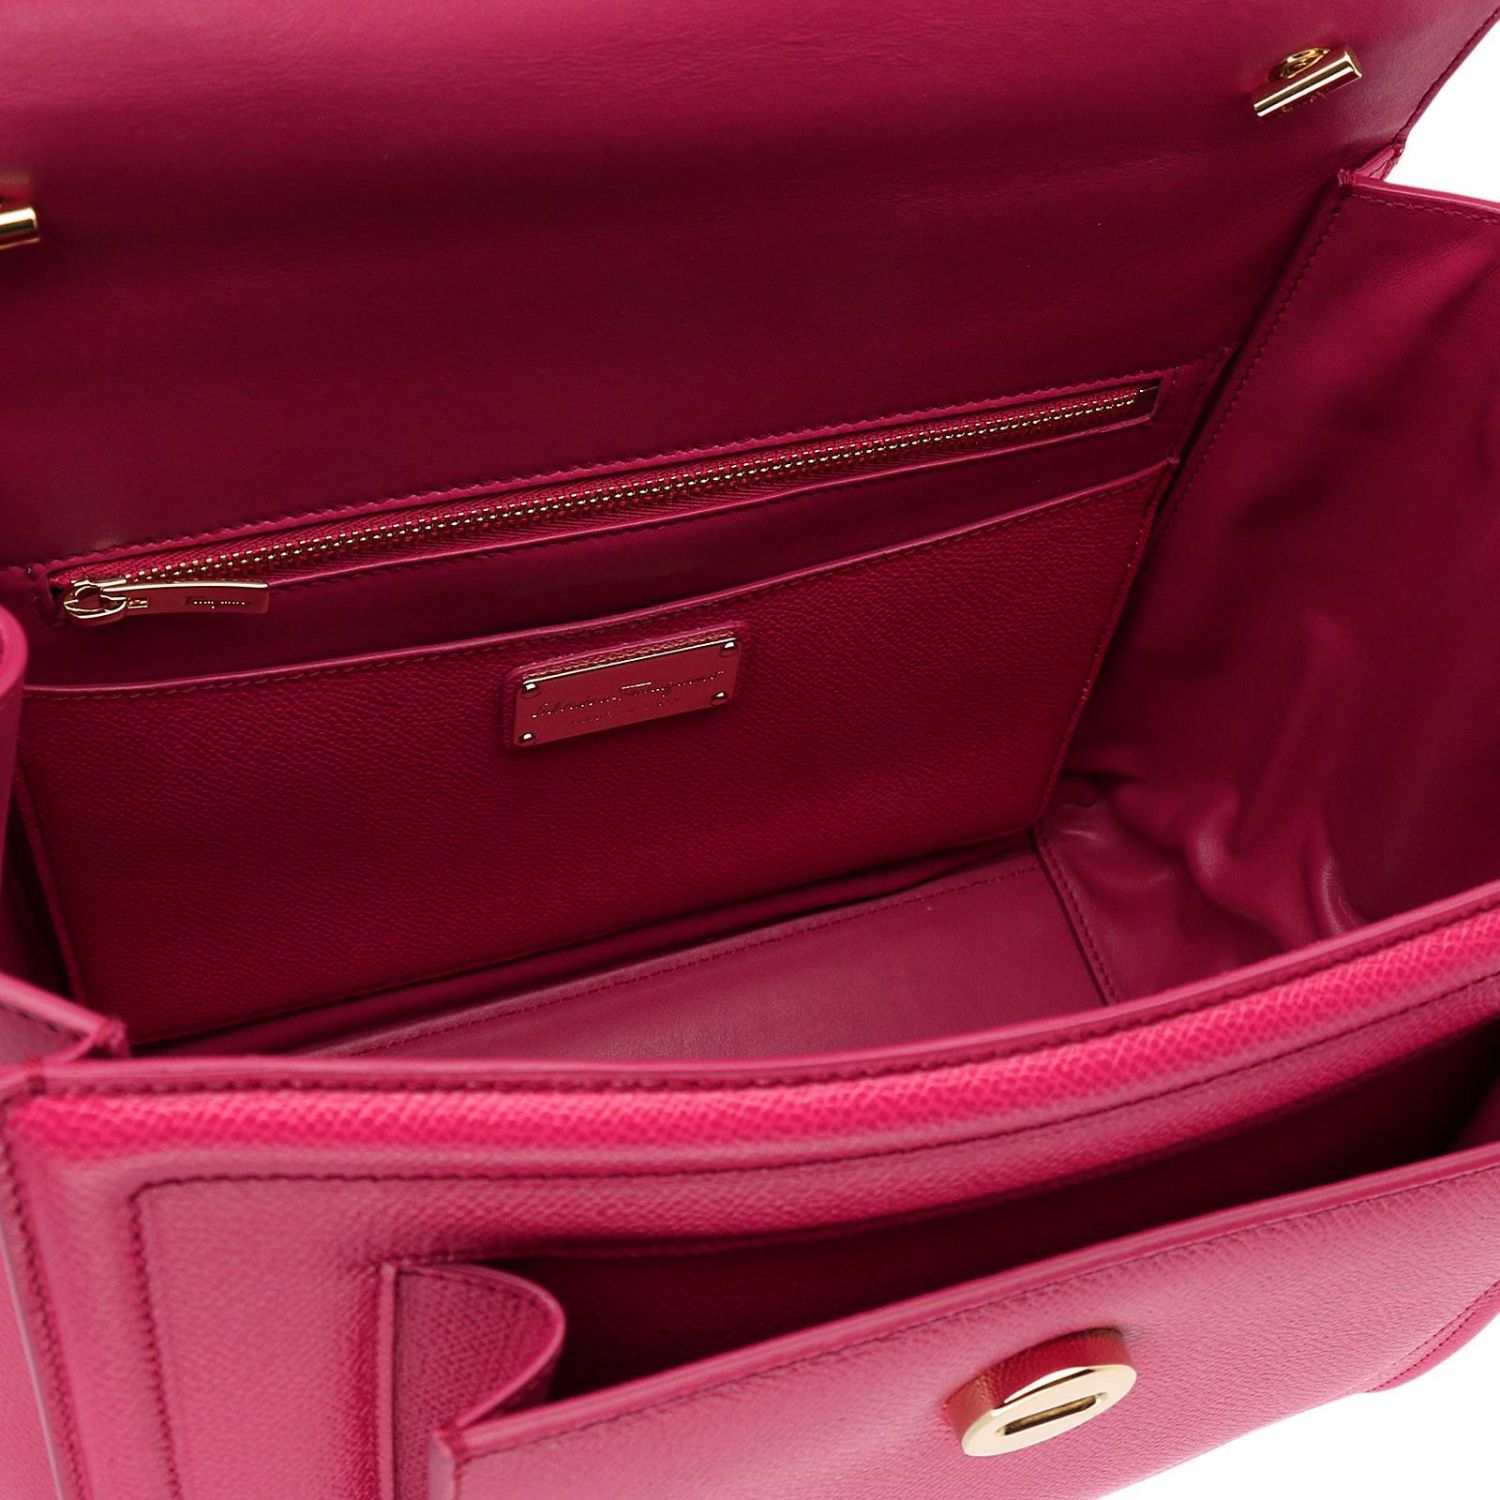 Salvatore Ferragamo Outlet: Shoulder bag women | Handbag Salvatore ...